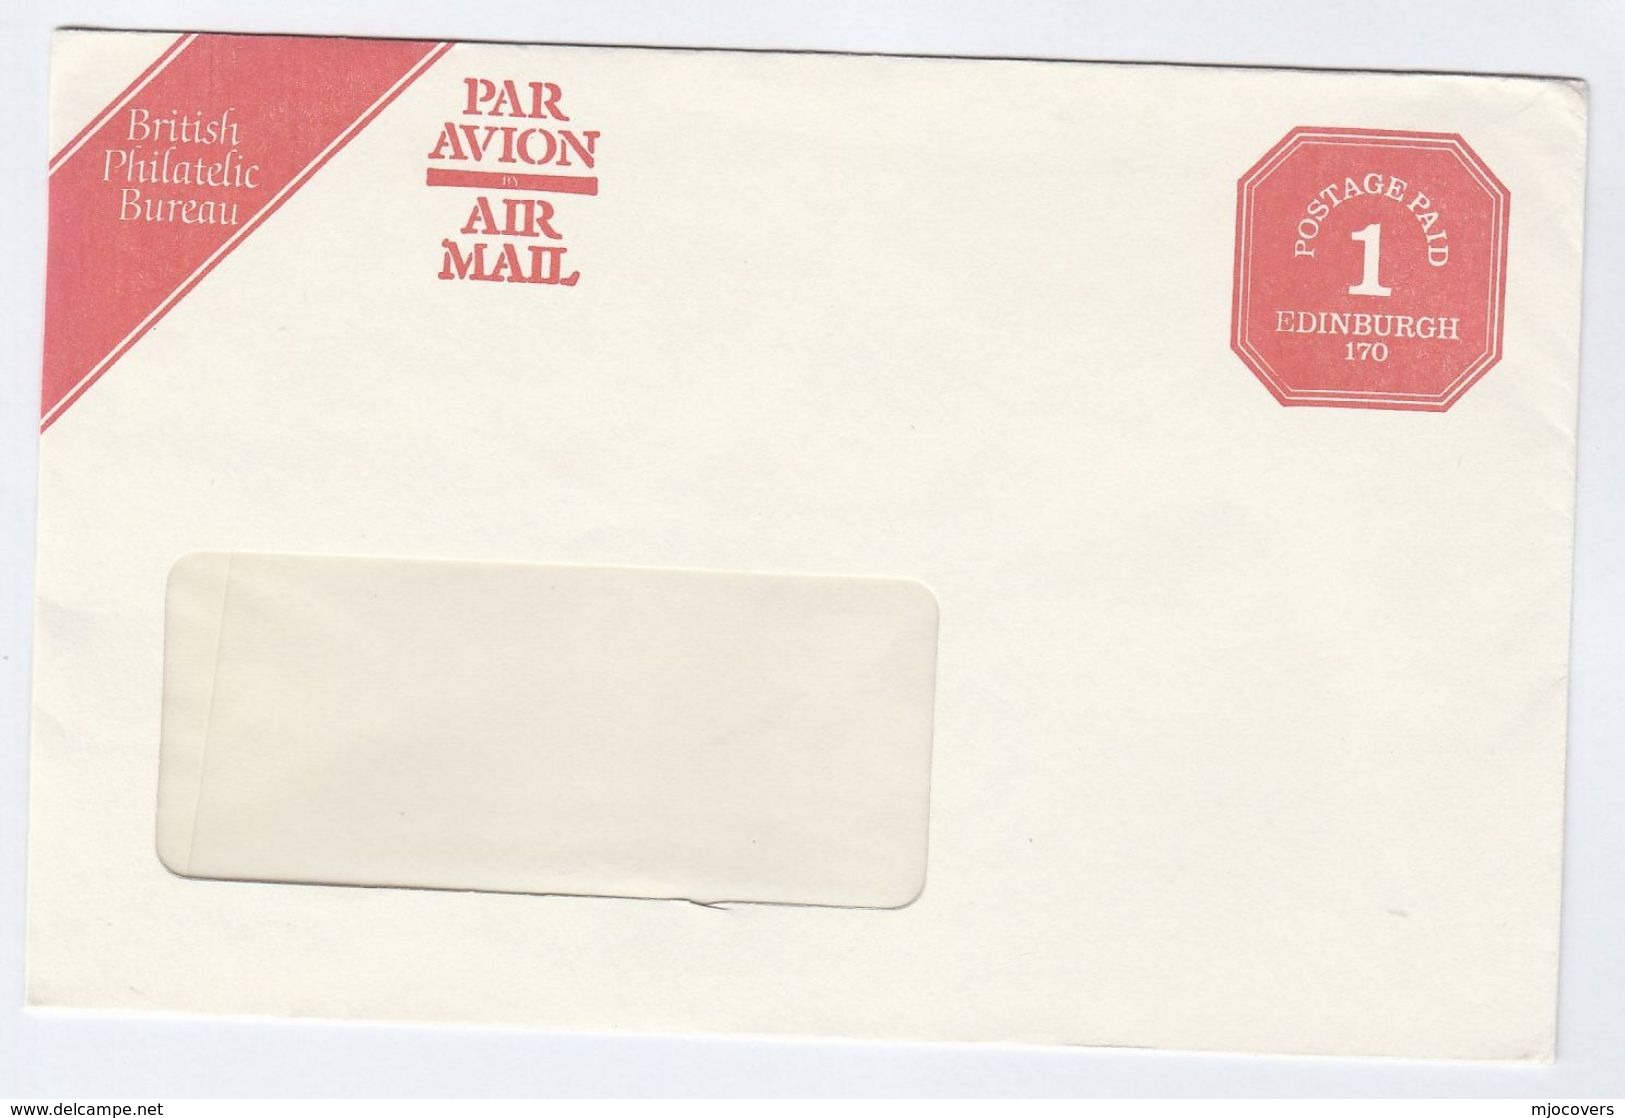 COVER Air Mail POSTAGE PAID 1 EDINBURGH 170 British Philatelic Bureau Postage Stationery GB - Storia Postale